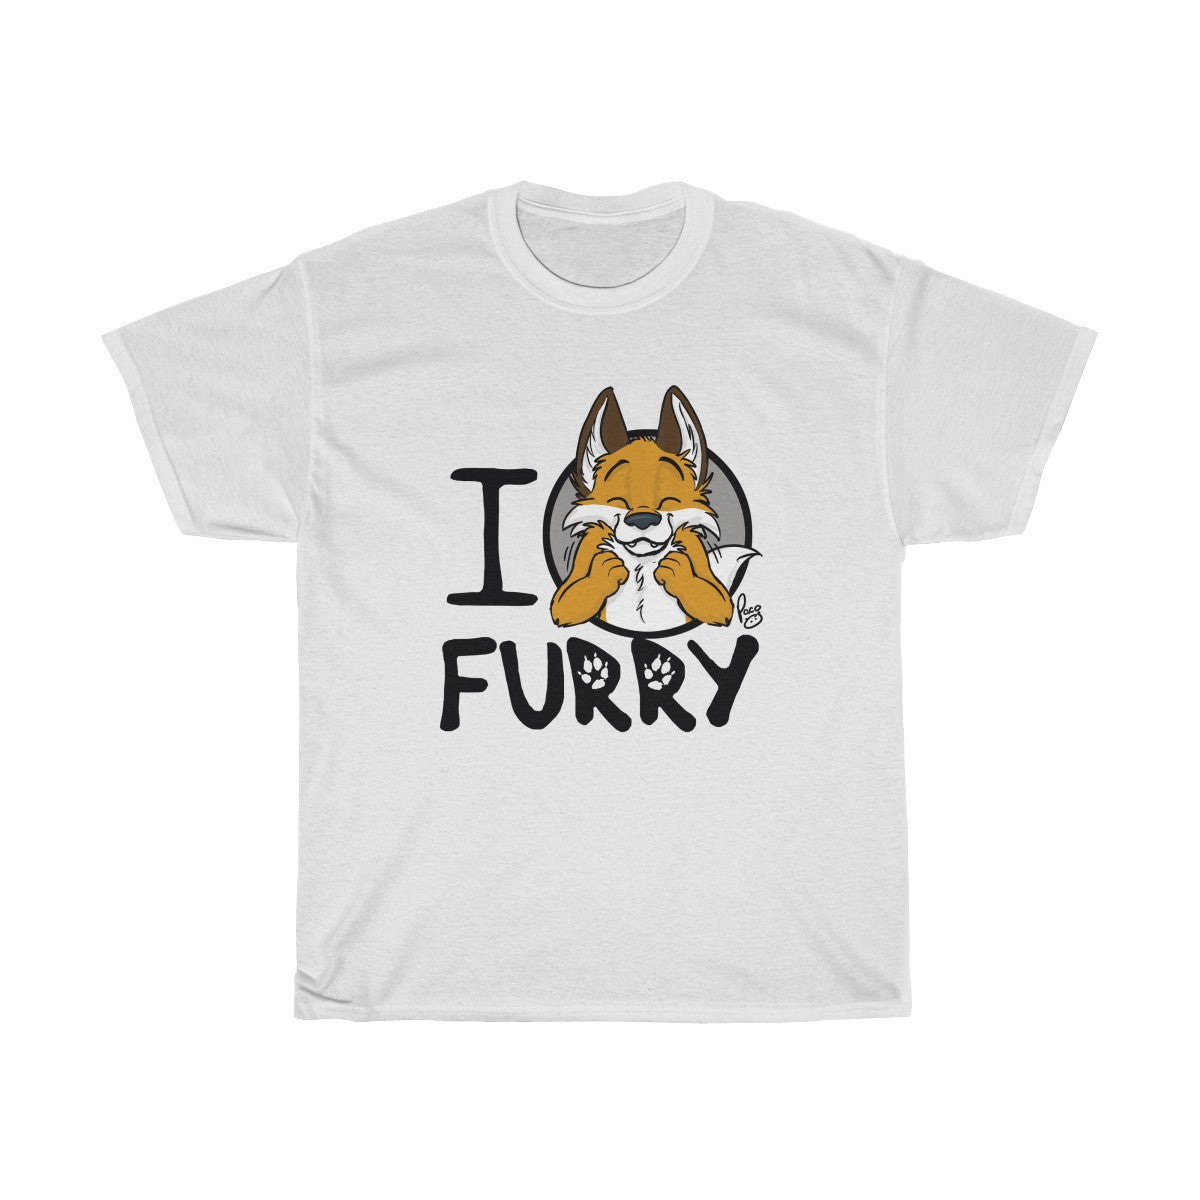 I Fox Furry - T-Shirt T-Shirt Paco Panda White S 